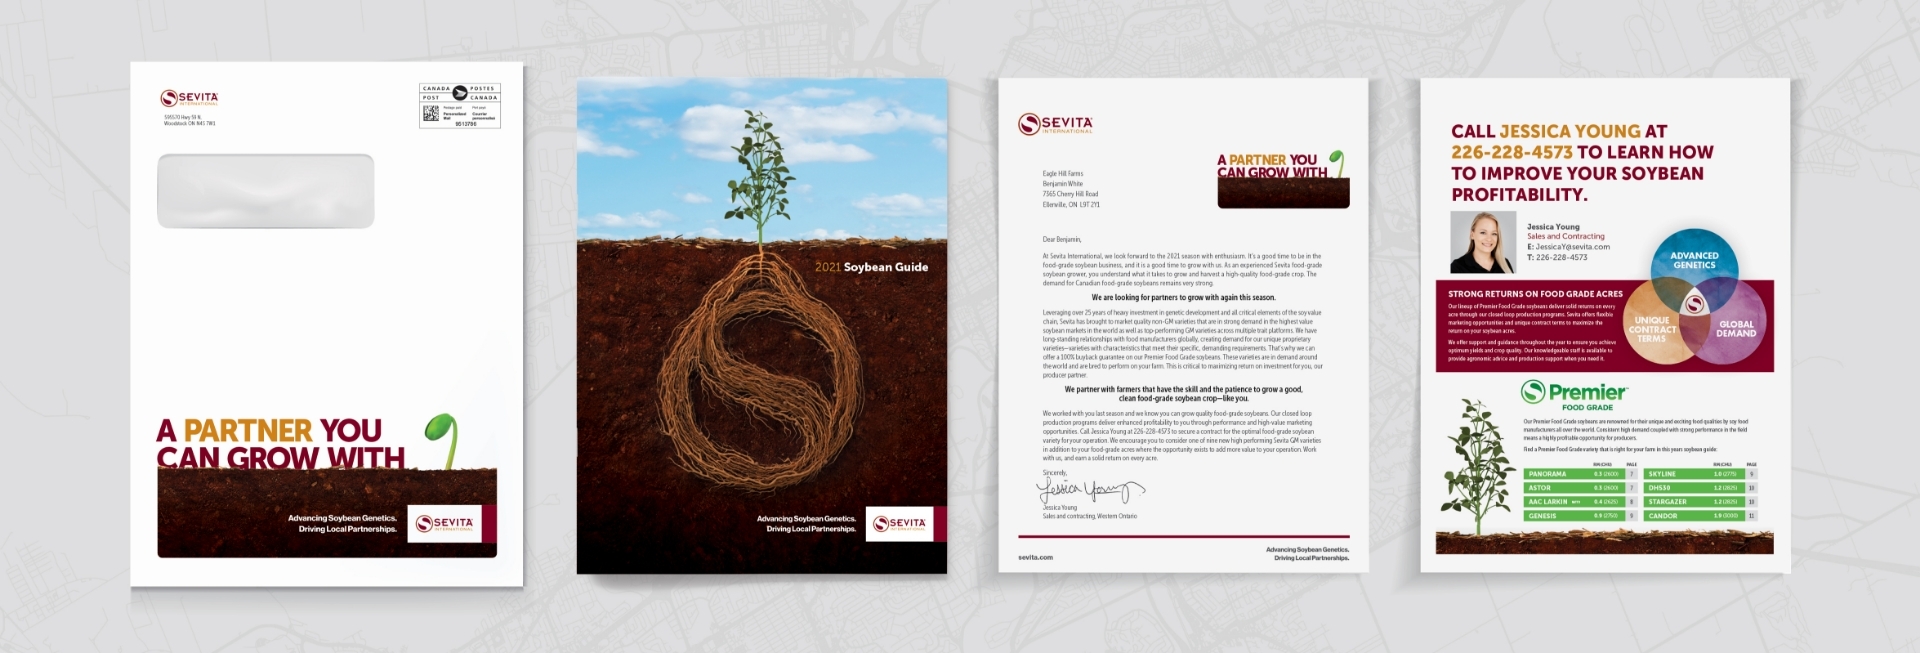 Sevita direct-mail marketing materials including booklet and branded envelope